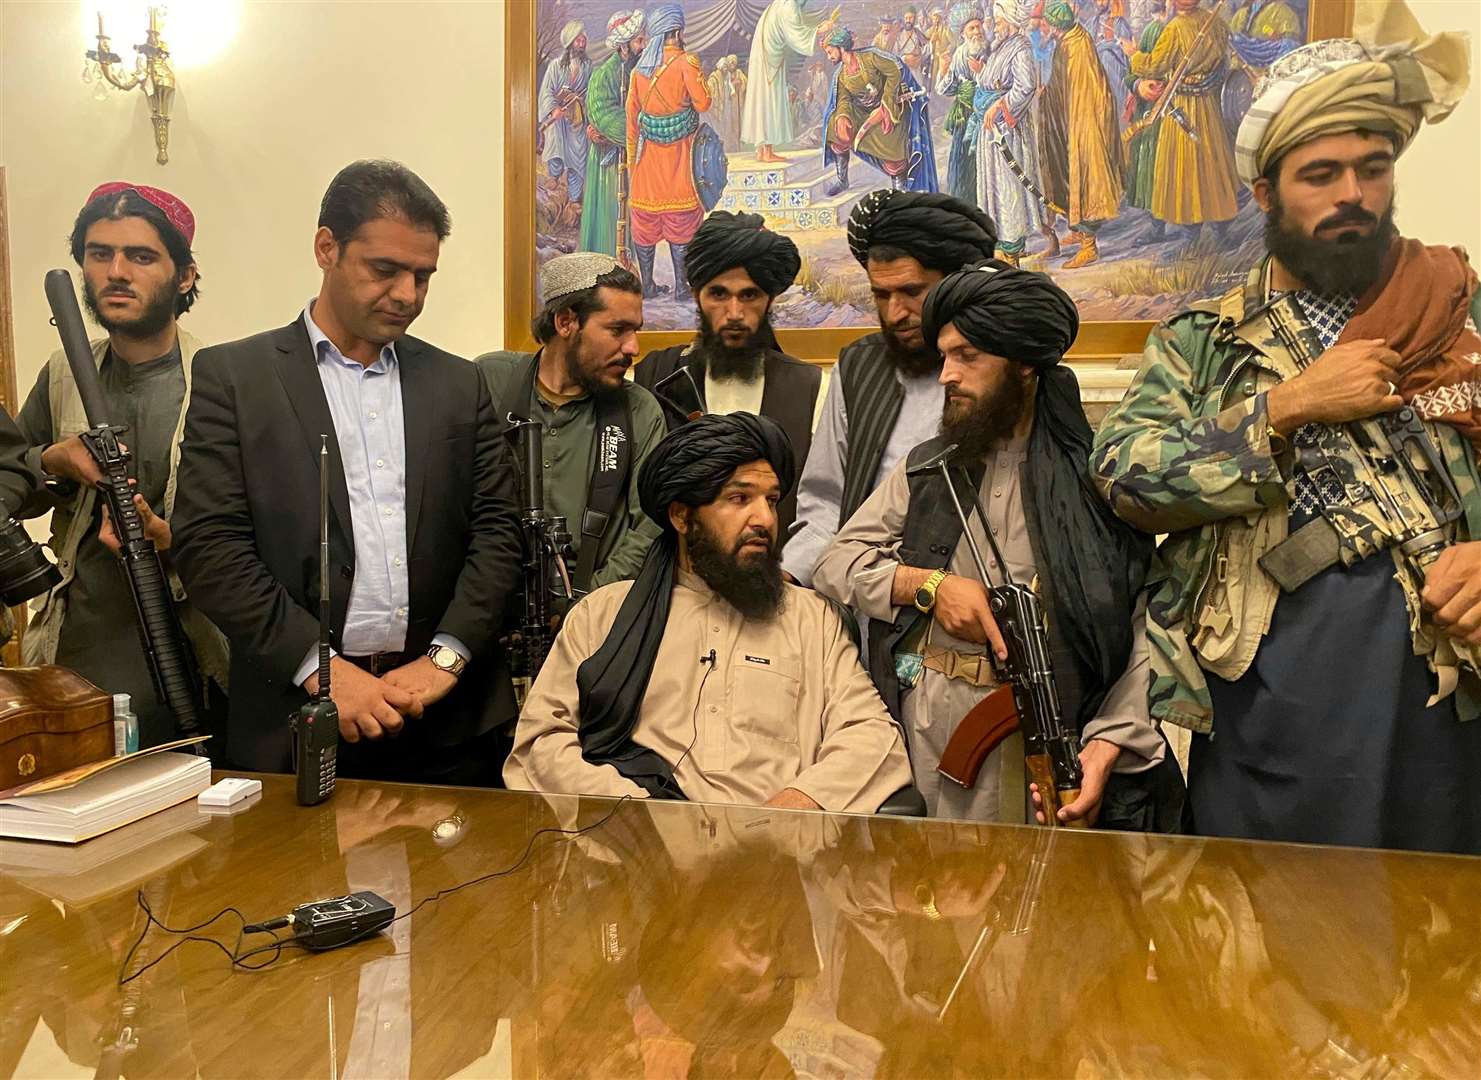 The Taliban has retaken Afghanistan in a matter of weeks Photo: PA